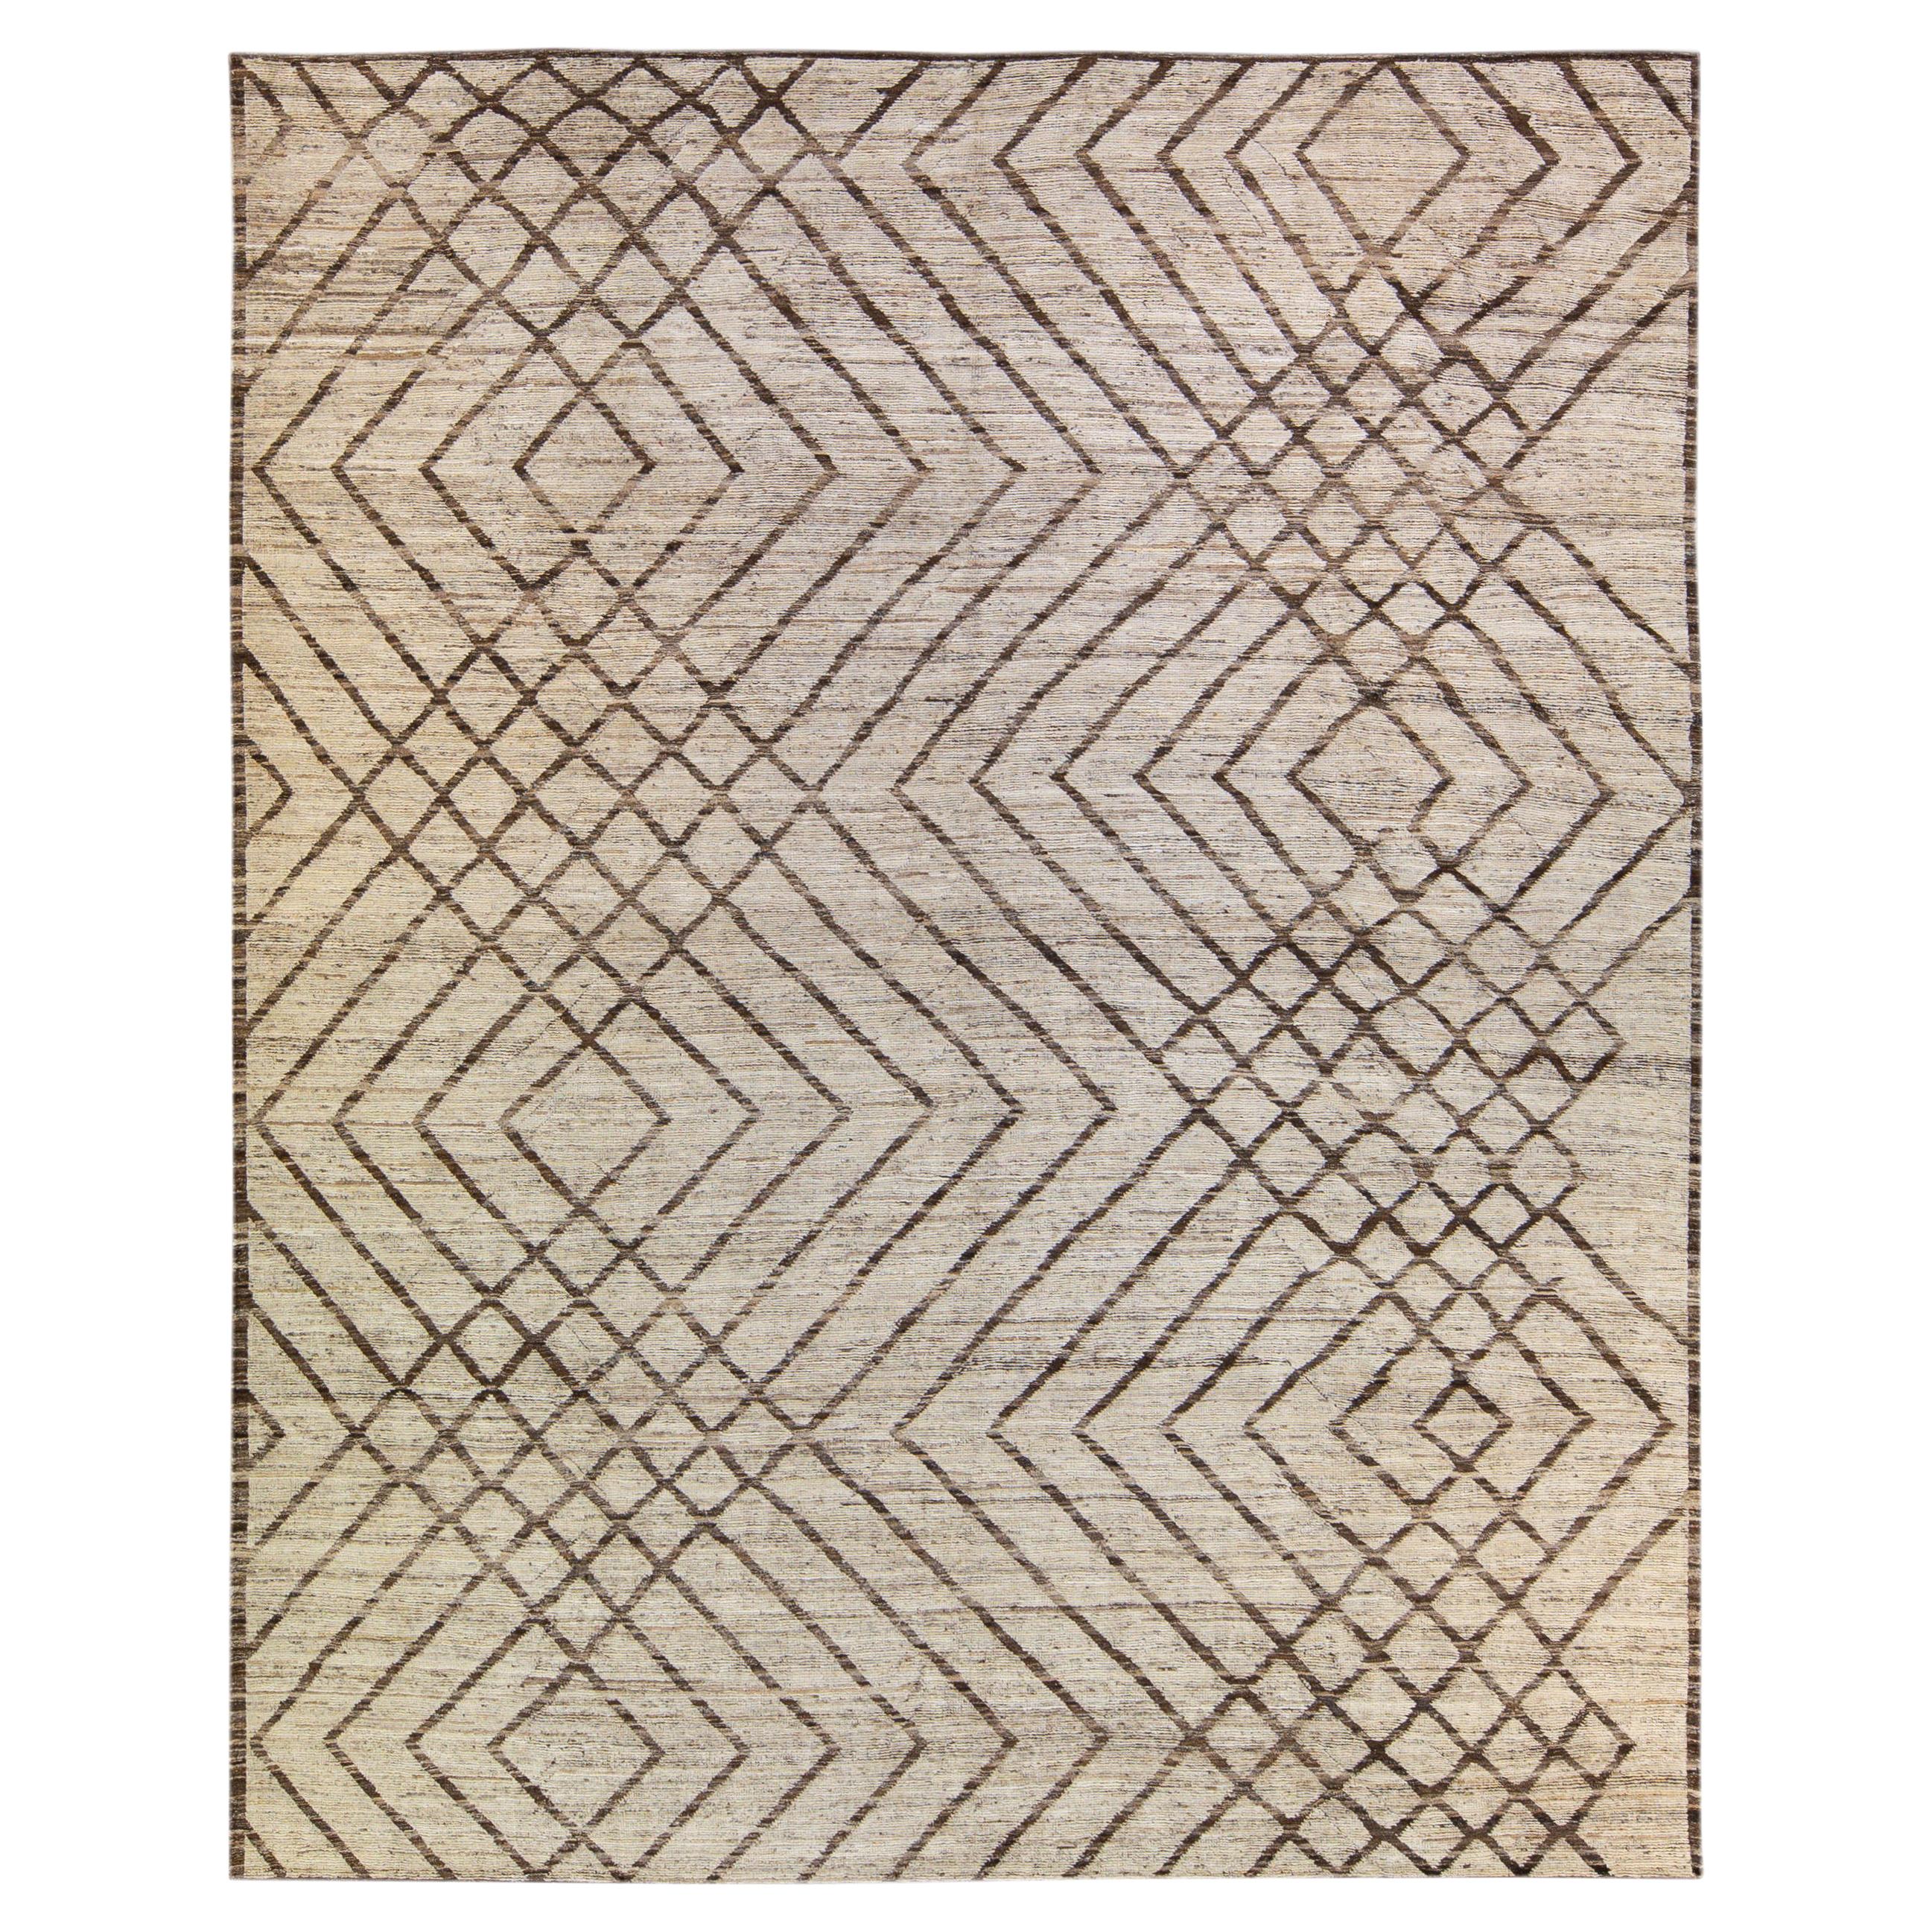 Modern Moroccan Style Beige and Brown Handmade Boho Pattern Wool Rug